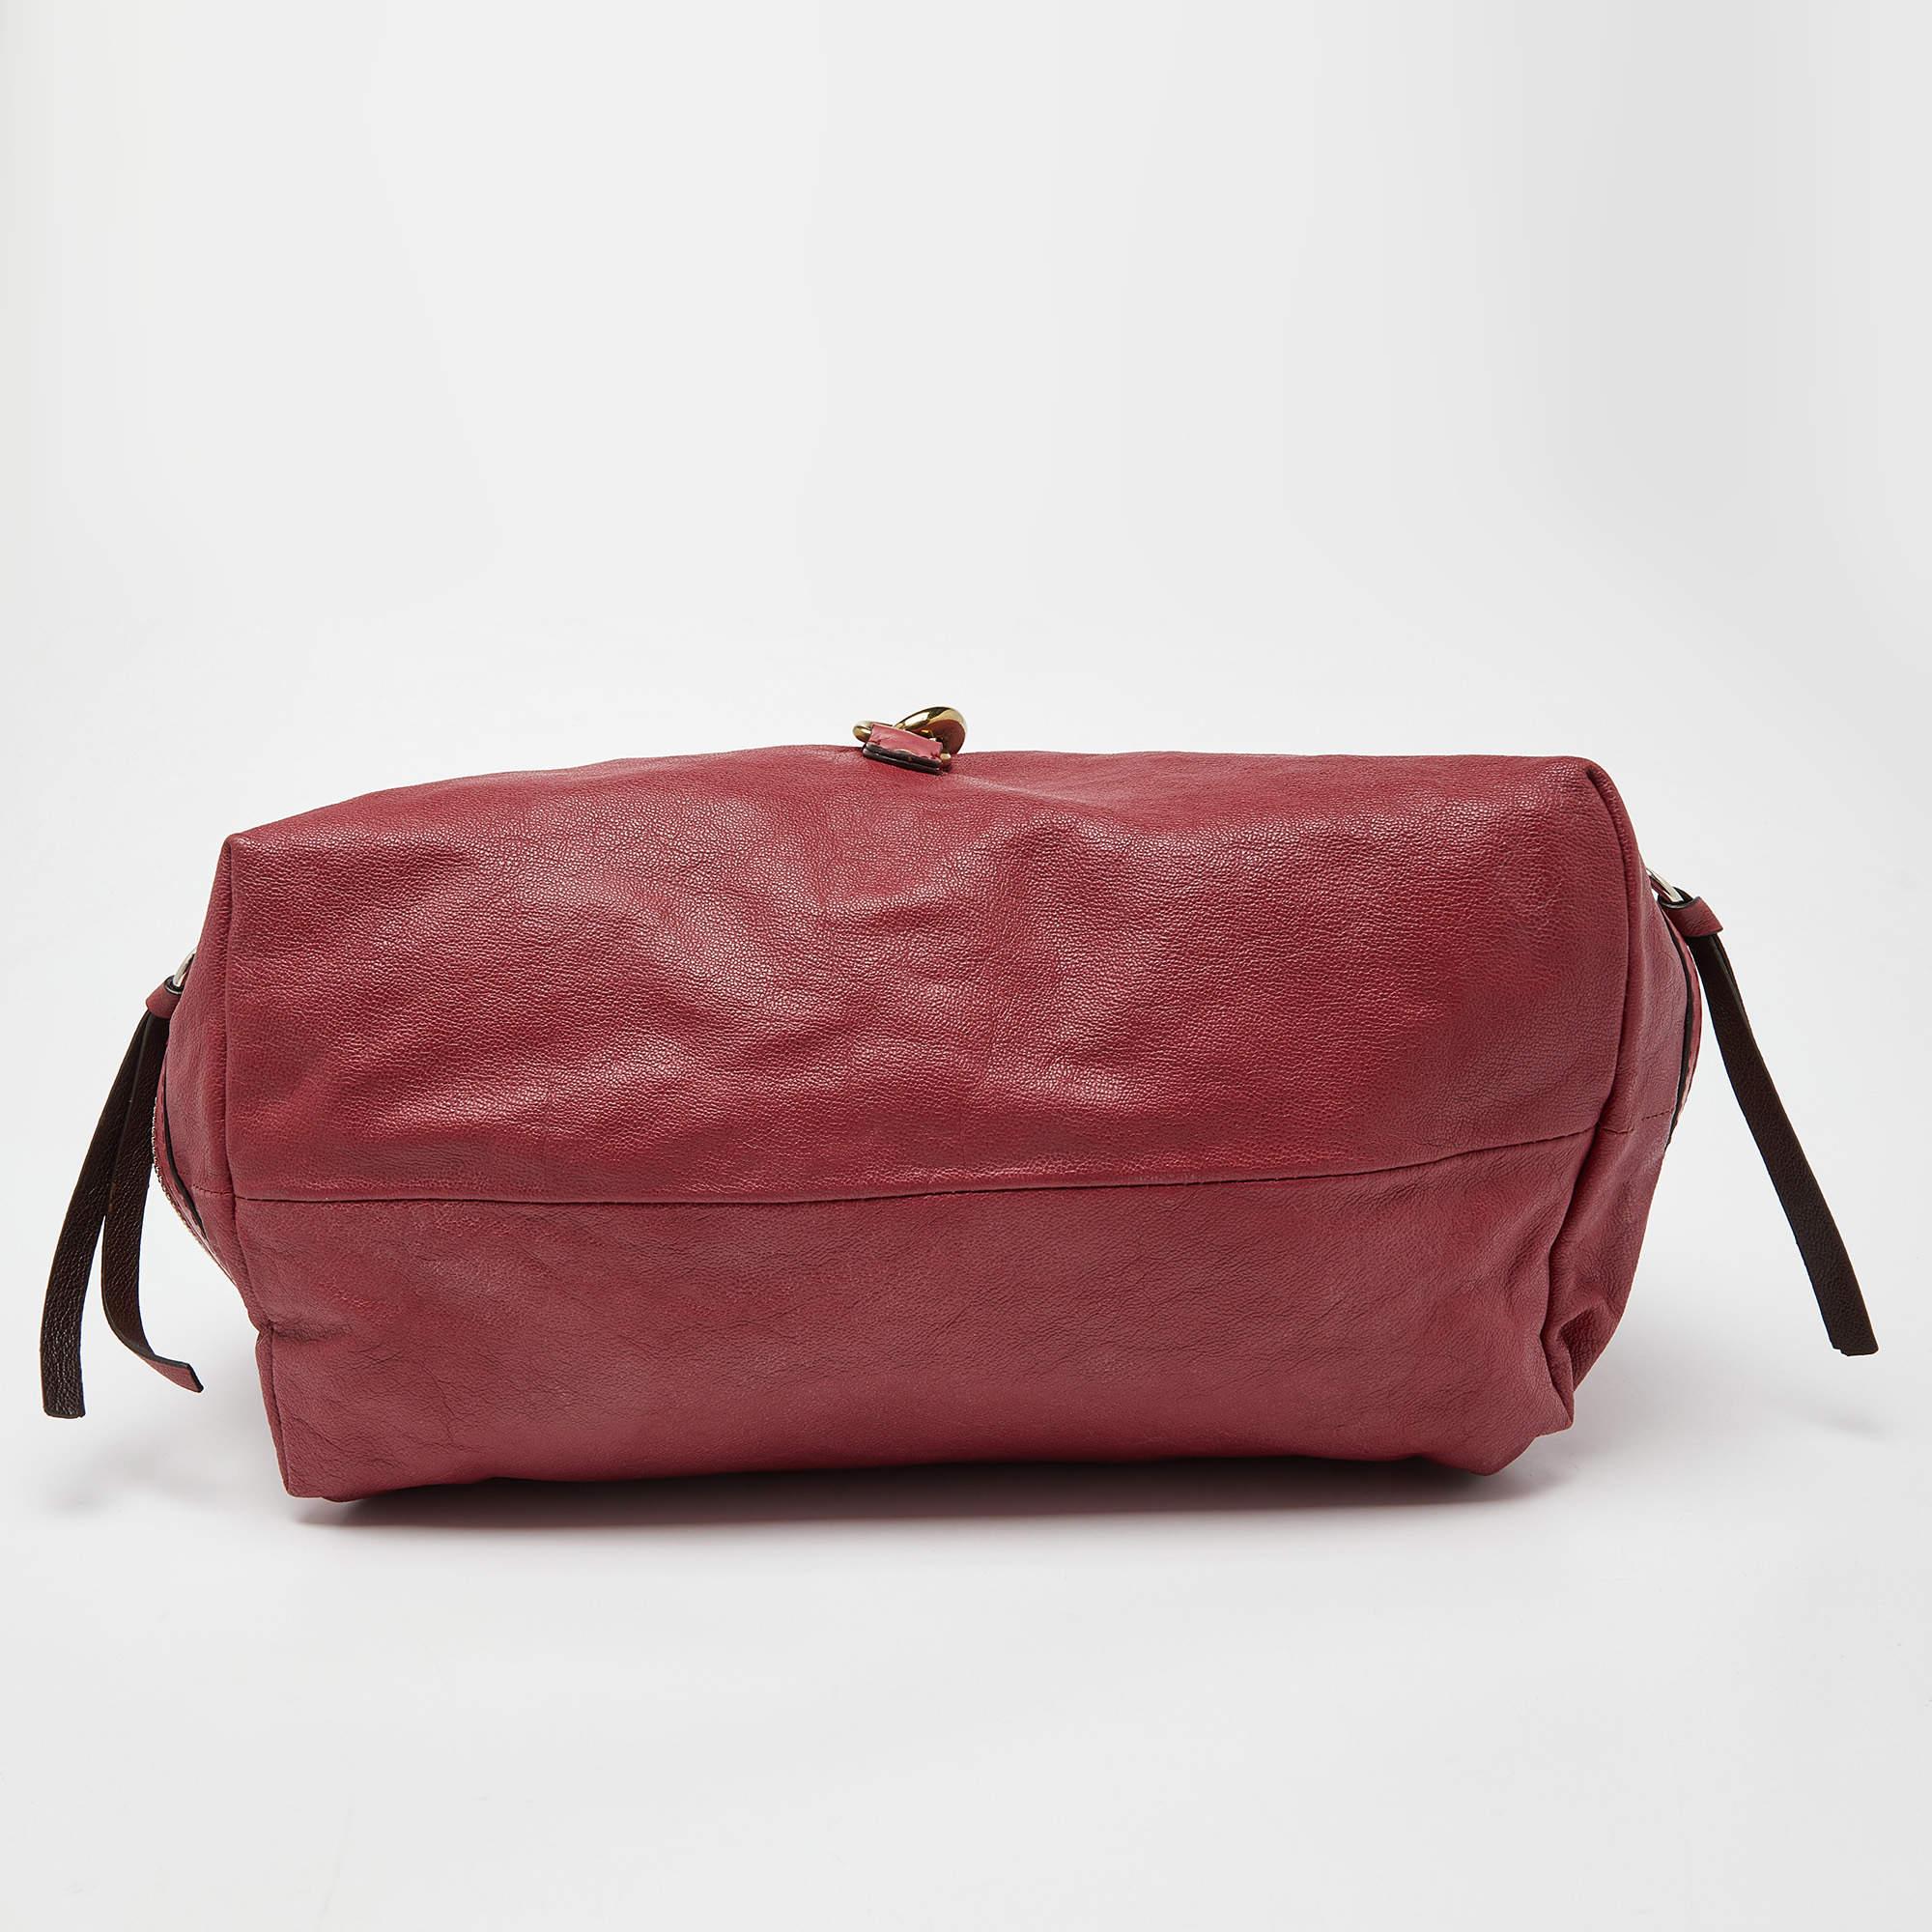 Chloe Pink/Brown Leather Paddington Satchel For Sale 5